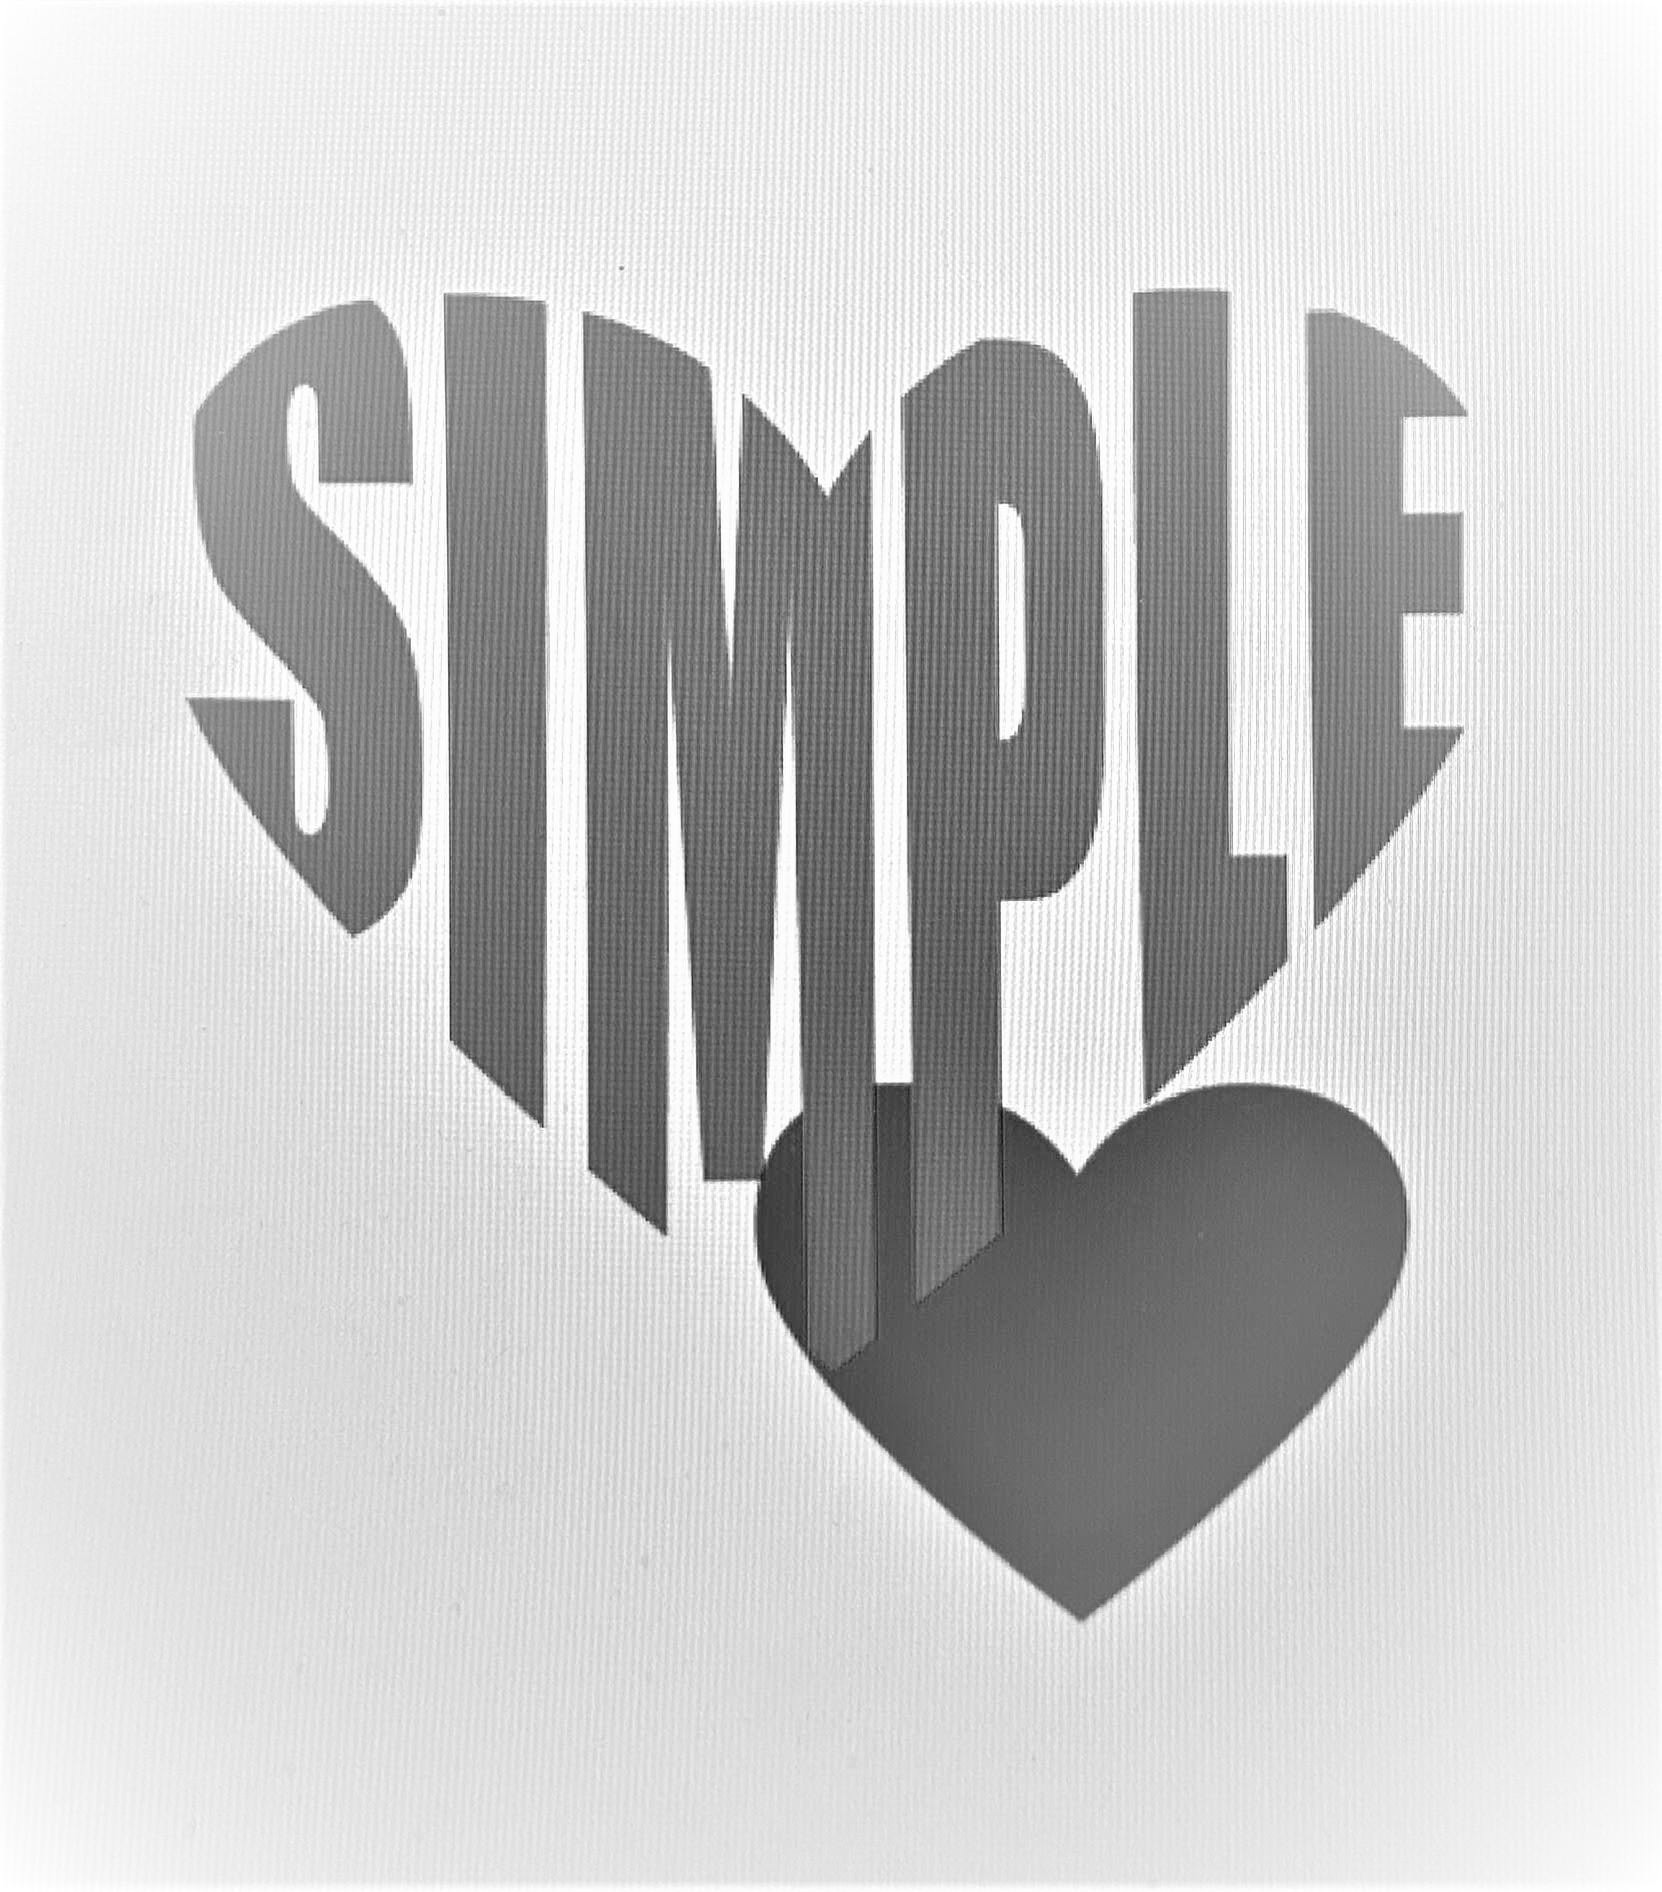 Trademark Logo SIMPLE